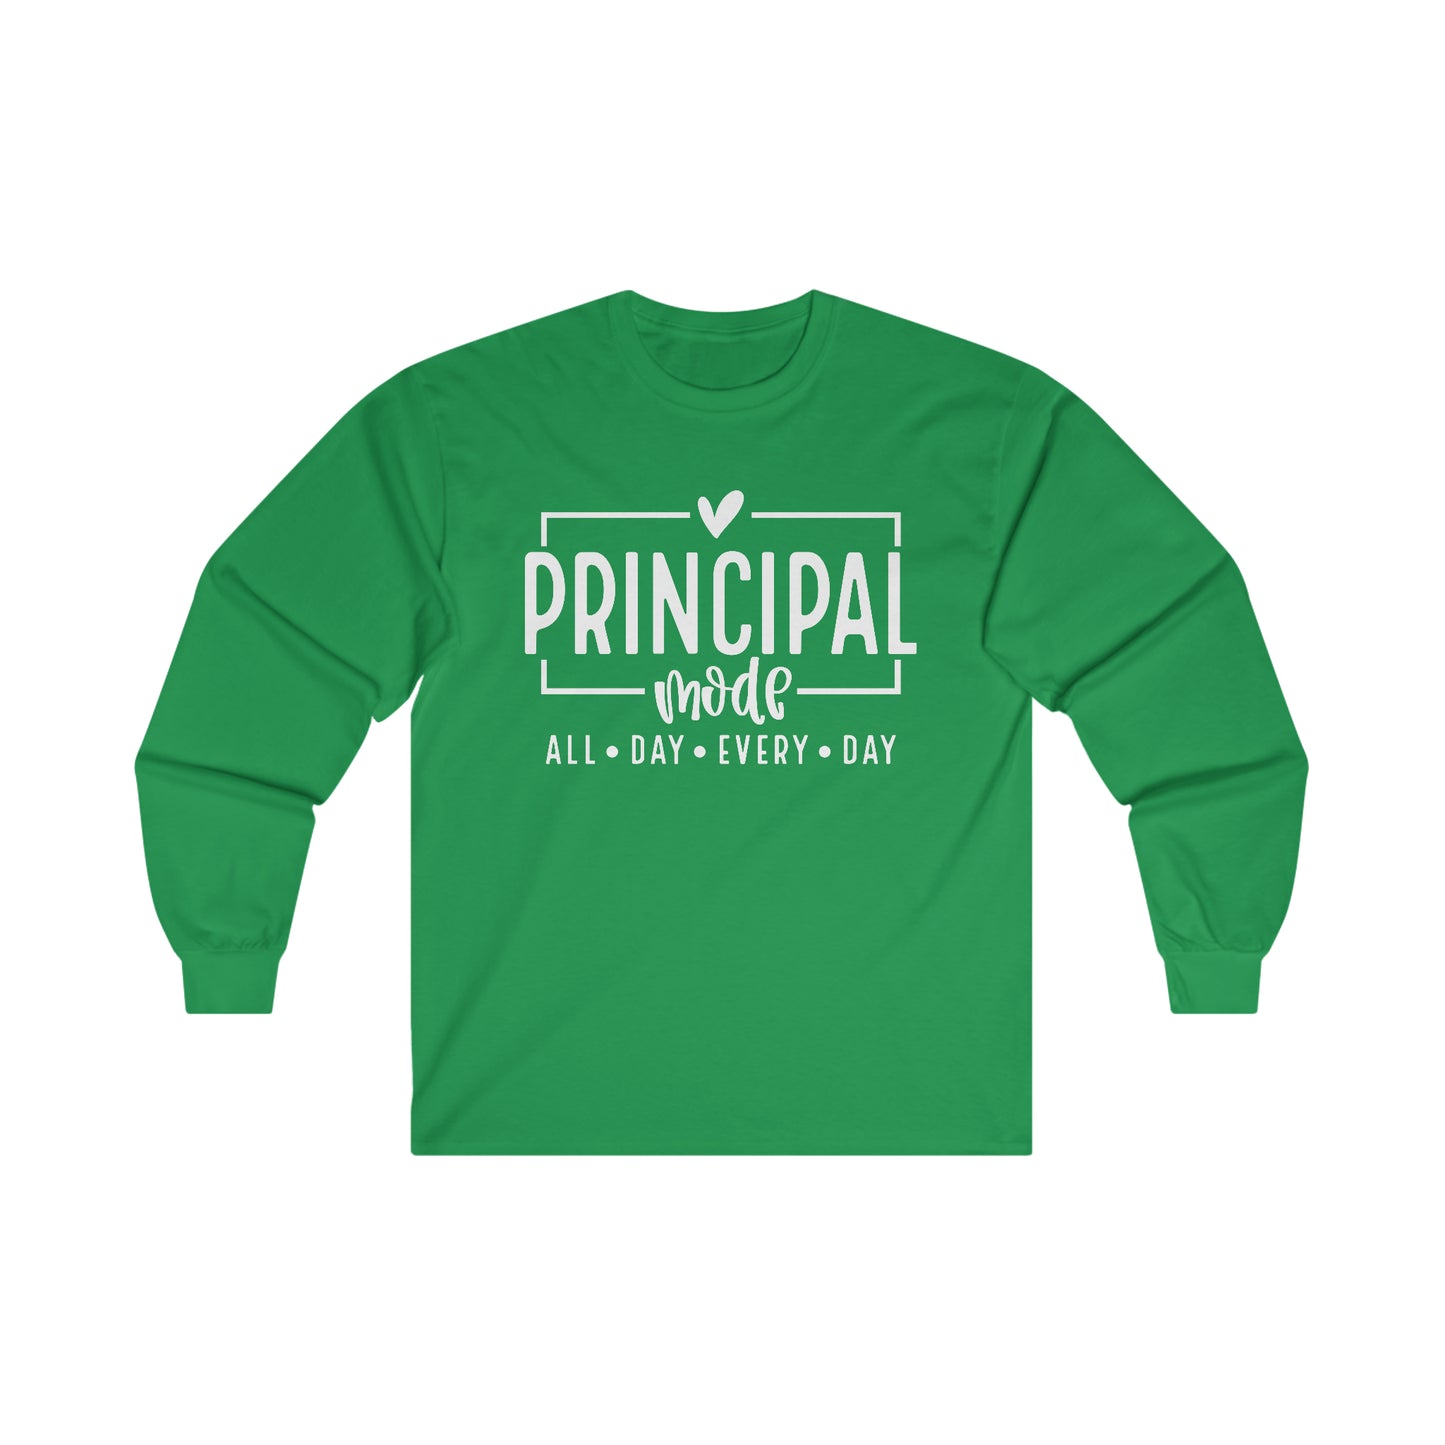 Principal Mode Long Sleeve Shirt